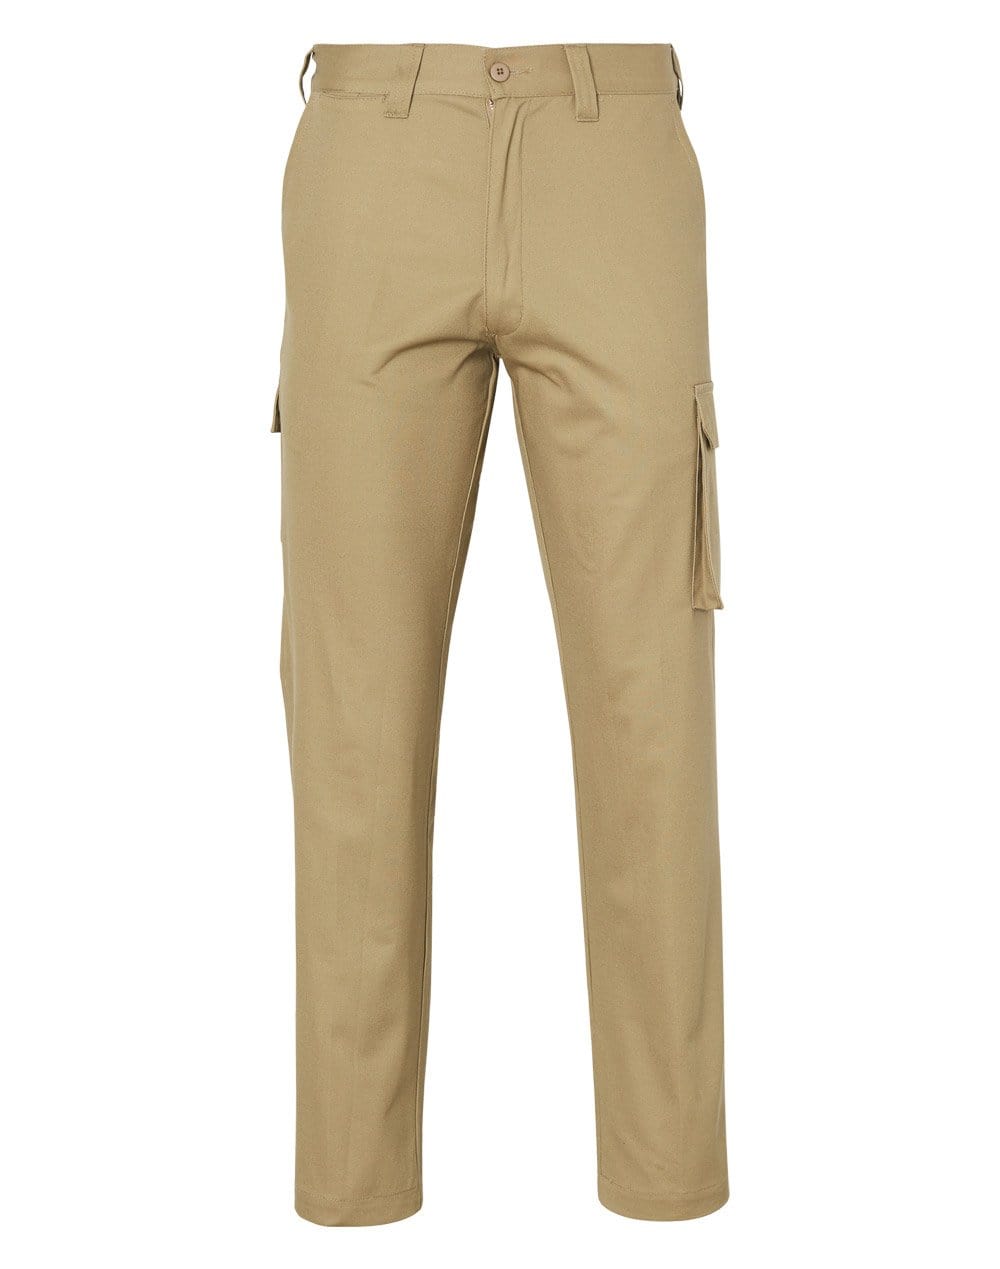 MEN'S HEAVY COTTON PRE-SHRUNK DRILL PANTS Stout Size WP08 Work Wear Benchmark Khaki 87S 